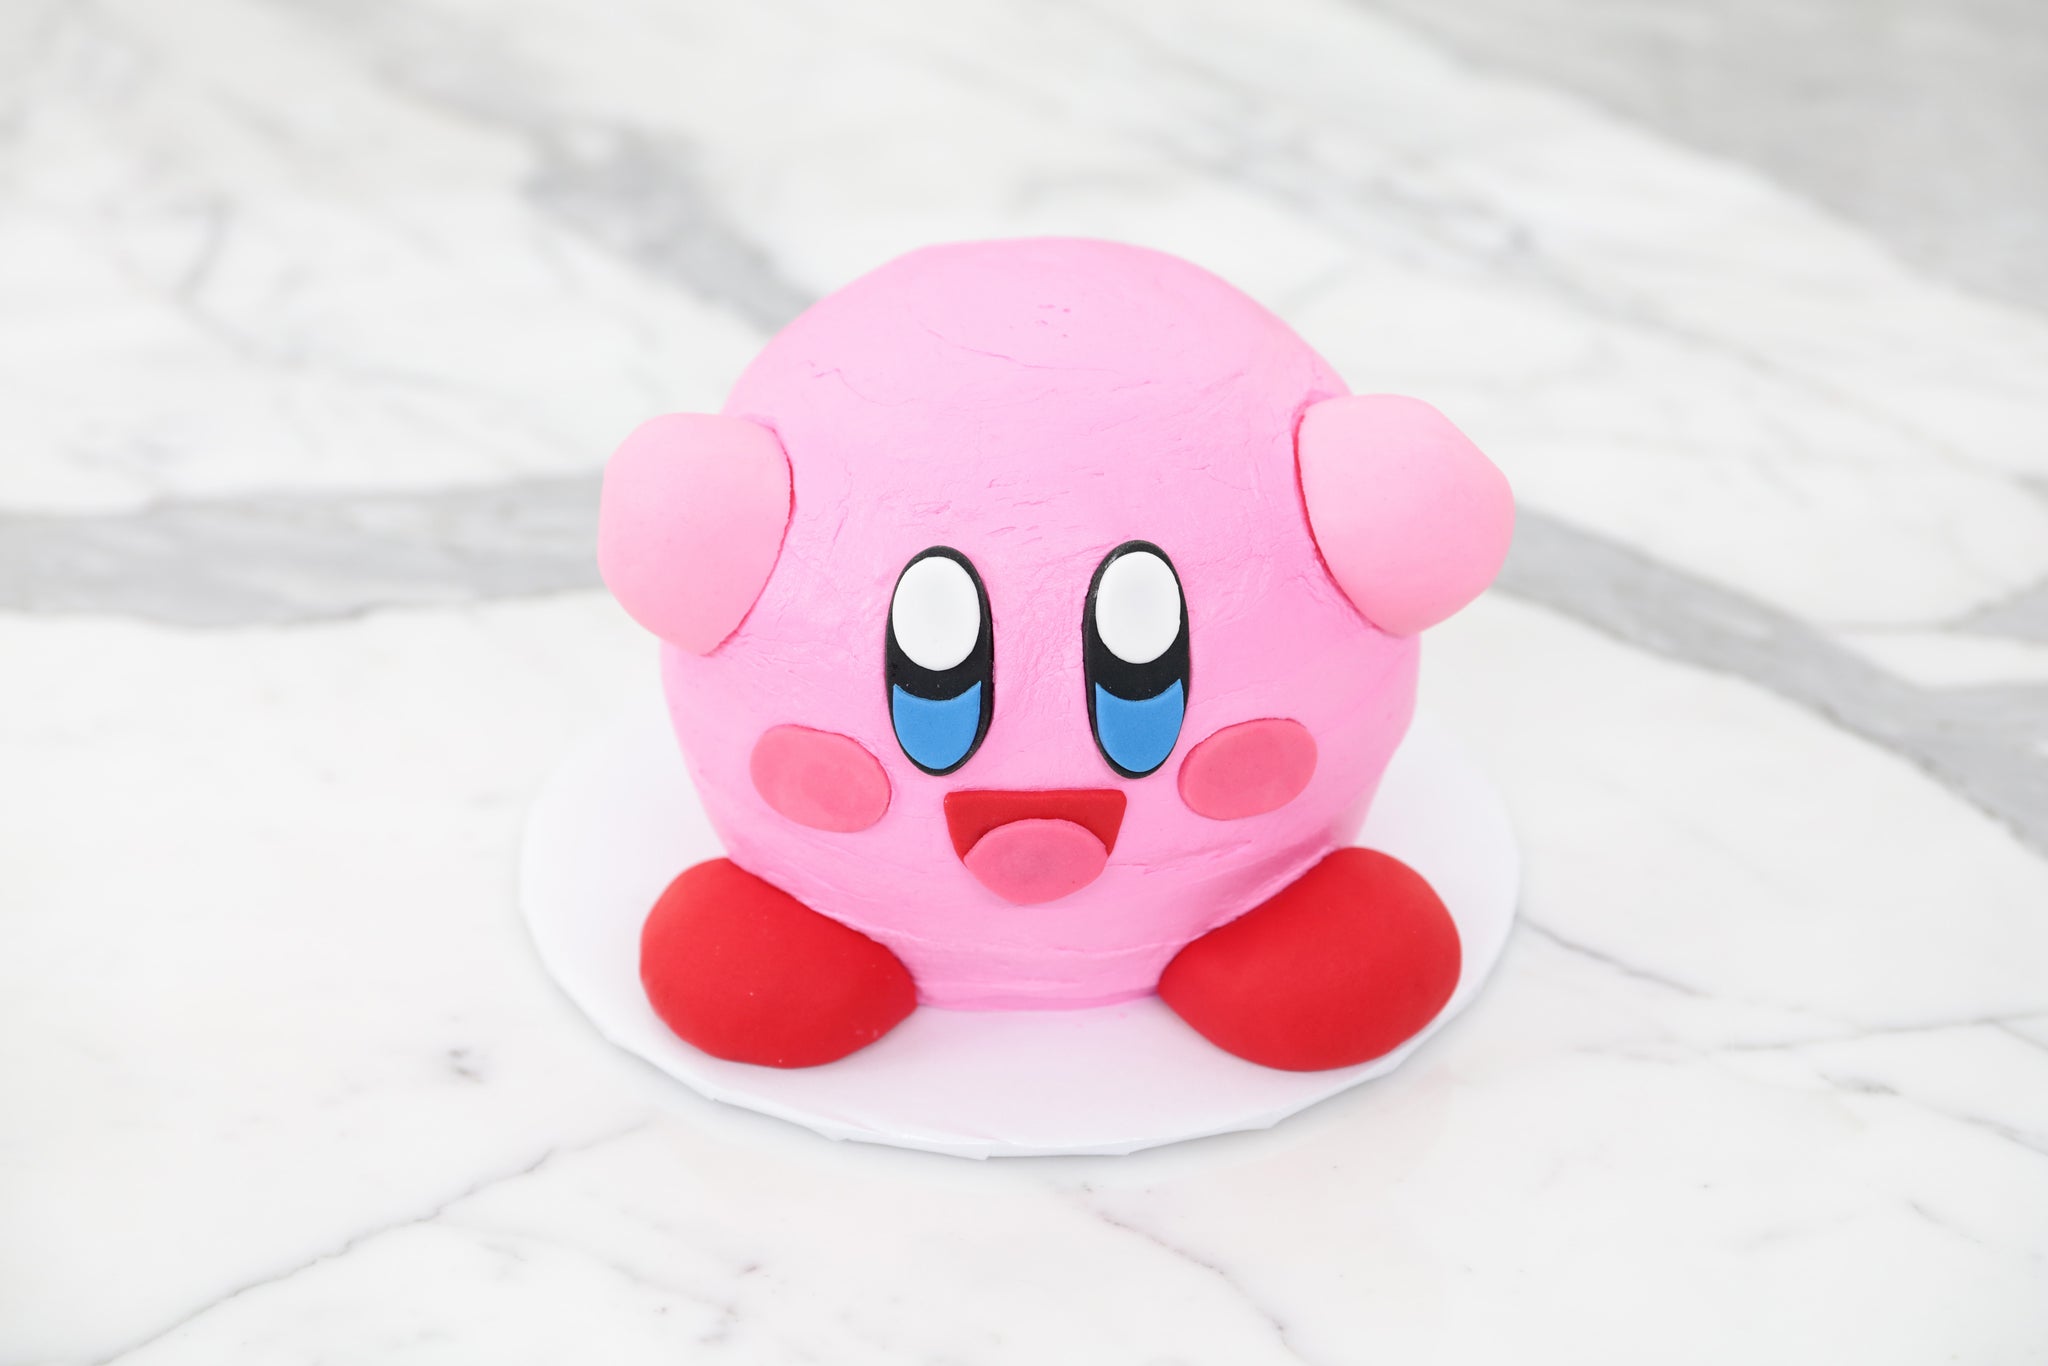 Kirby Cake Pops – Rosanna Pansino